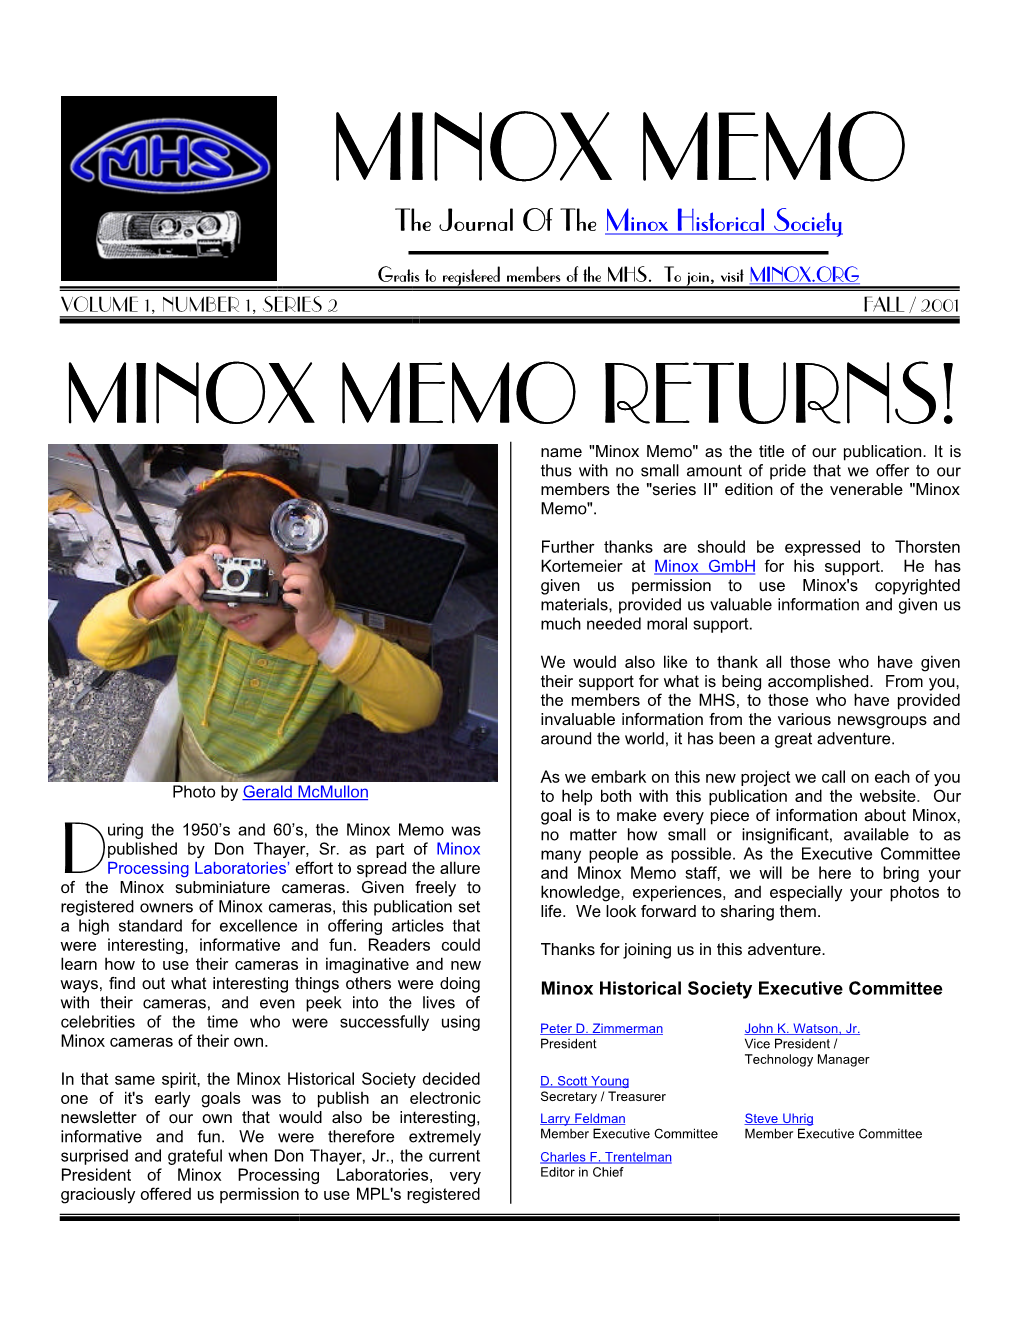 MINOX MEMOMEMOMINOX T He J Ourn Al O F Th E the Journal of the Minox Historical Societysocietyminox